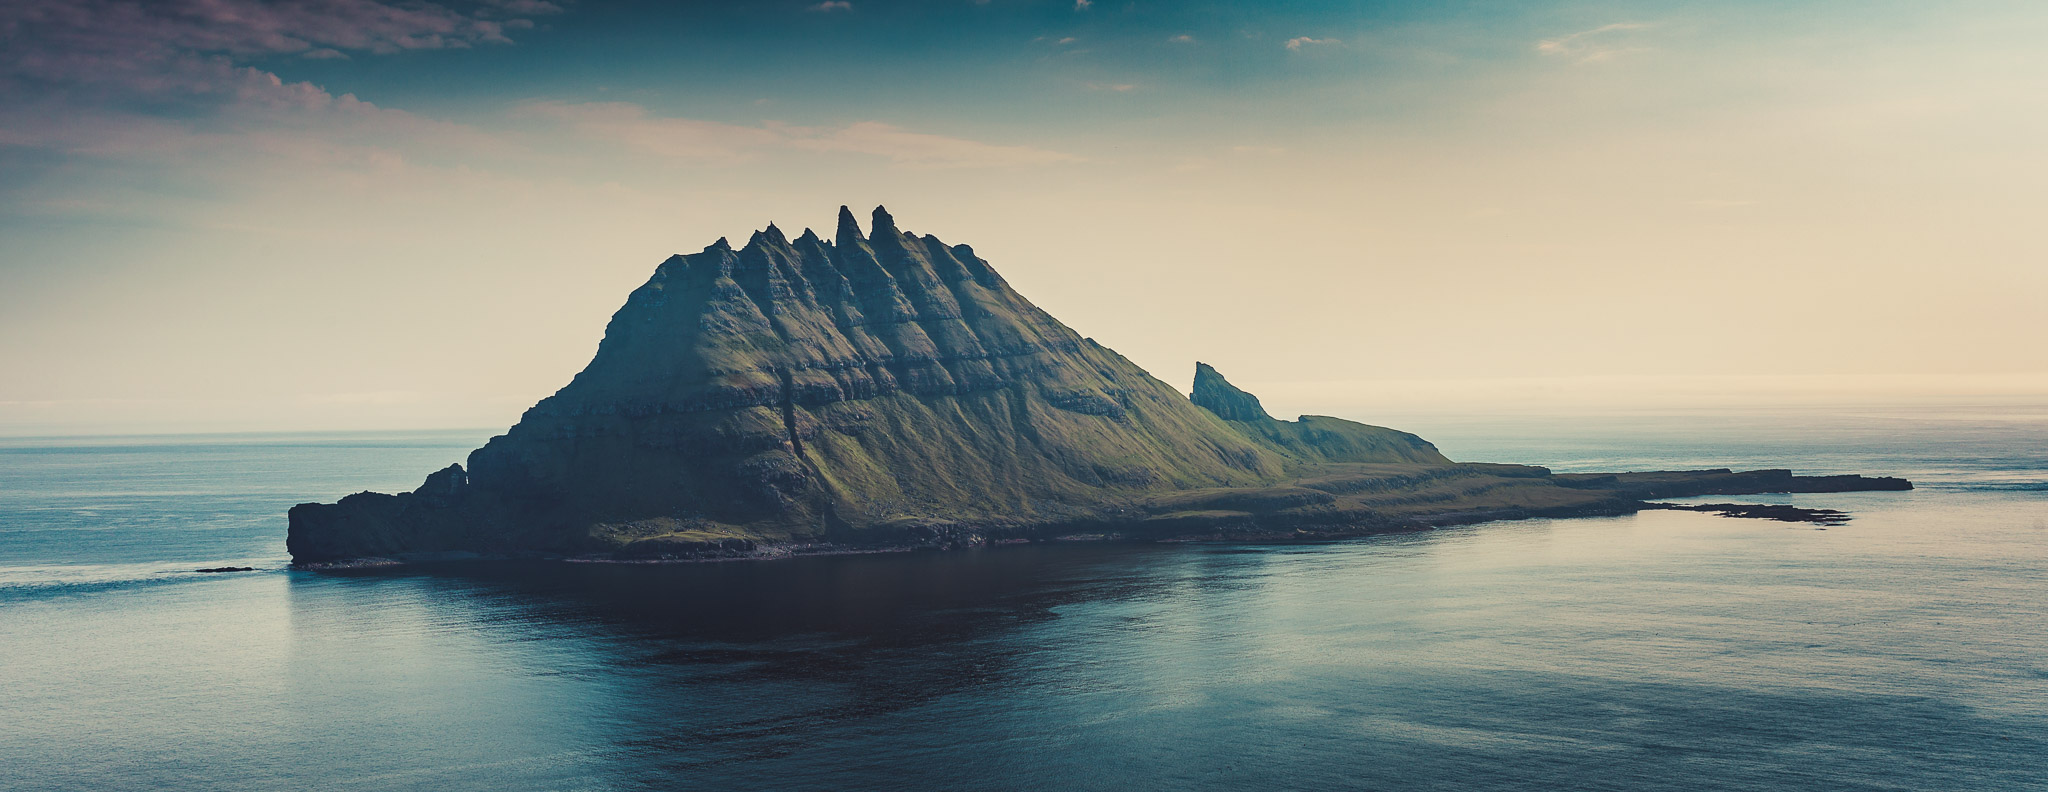 Gassadalur, Faroe Islands